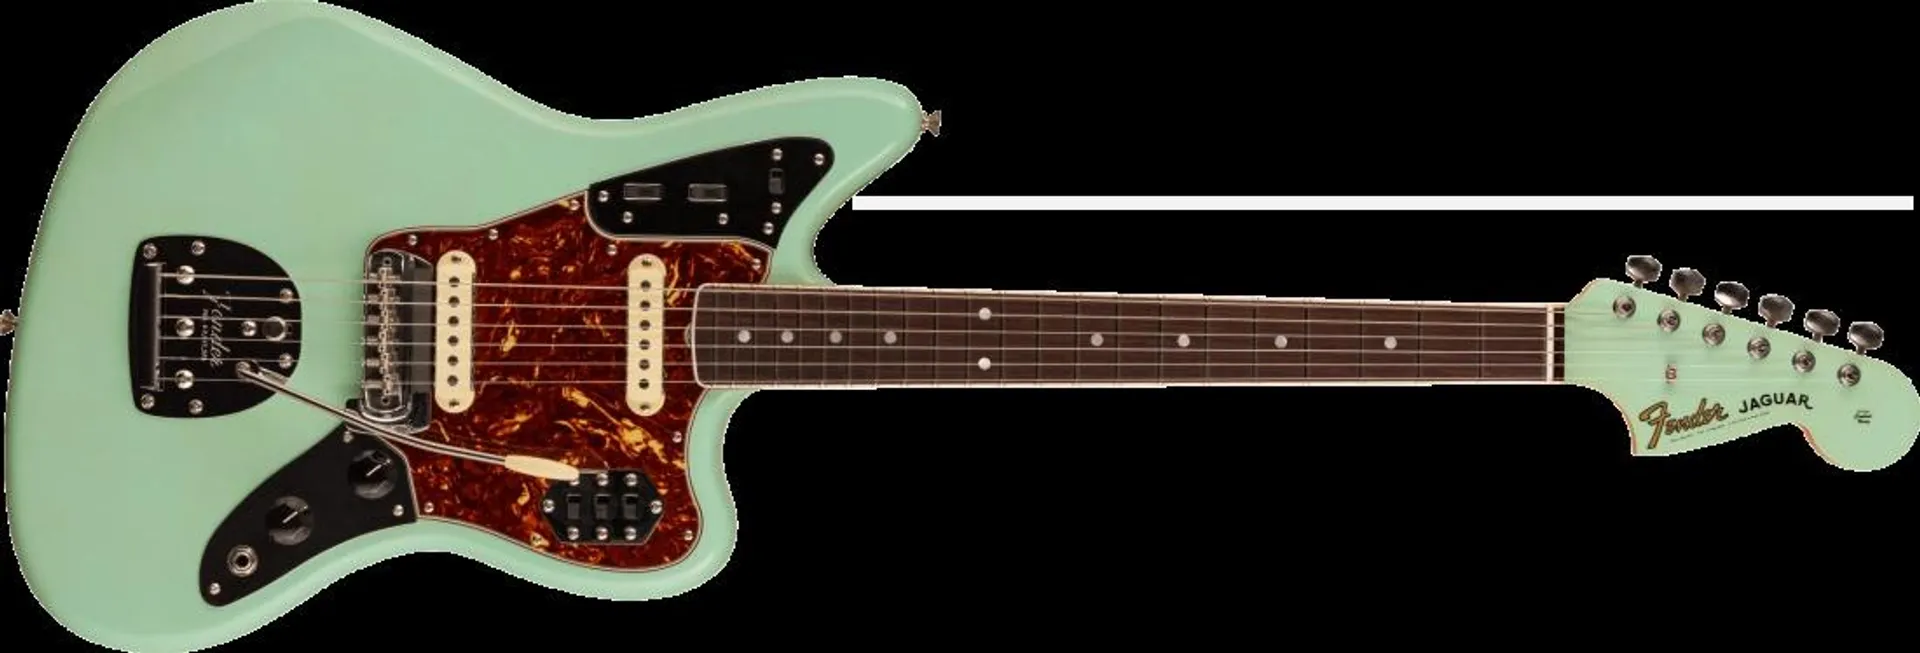 '66 Jaguar Deluxe Closet Classic, Rosewood Fingerboard - Aged Surf Green